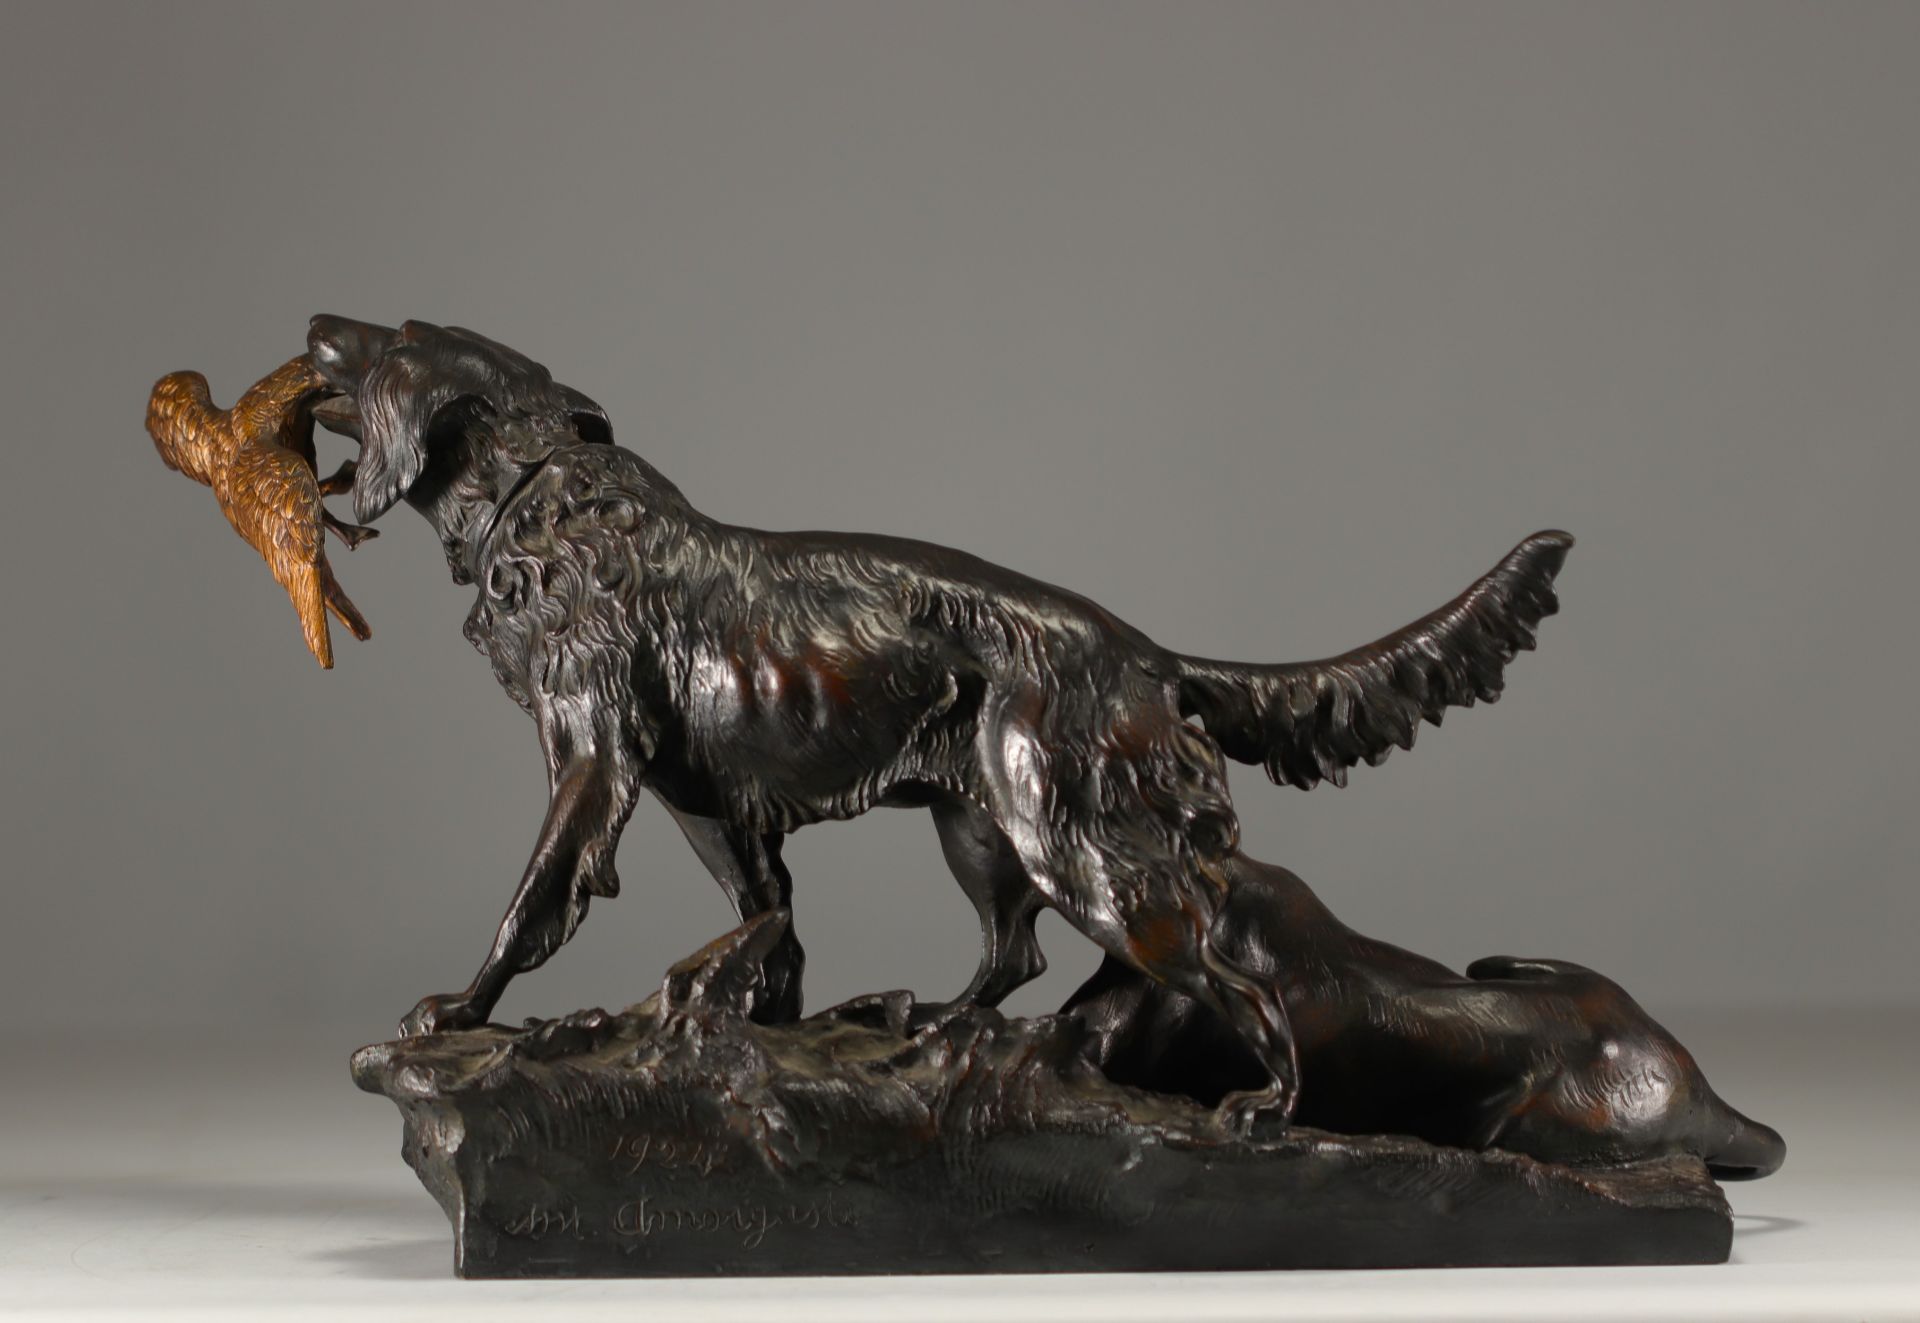 Antonio AMORGASTI (1880-1942) - "Hunting dogs" Bronze sculpture, 1924. - Image 2 of 2